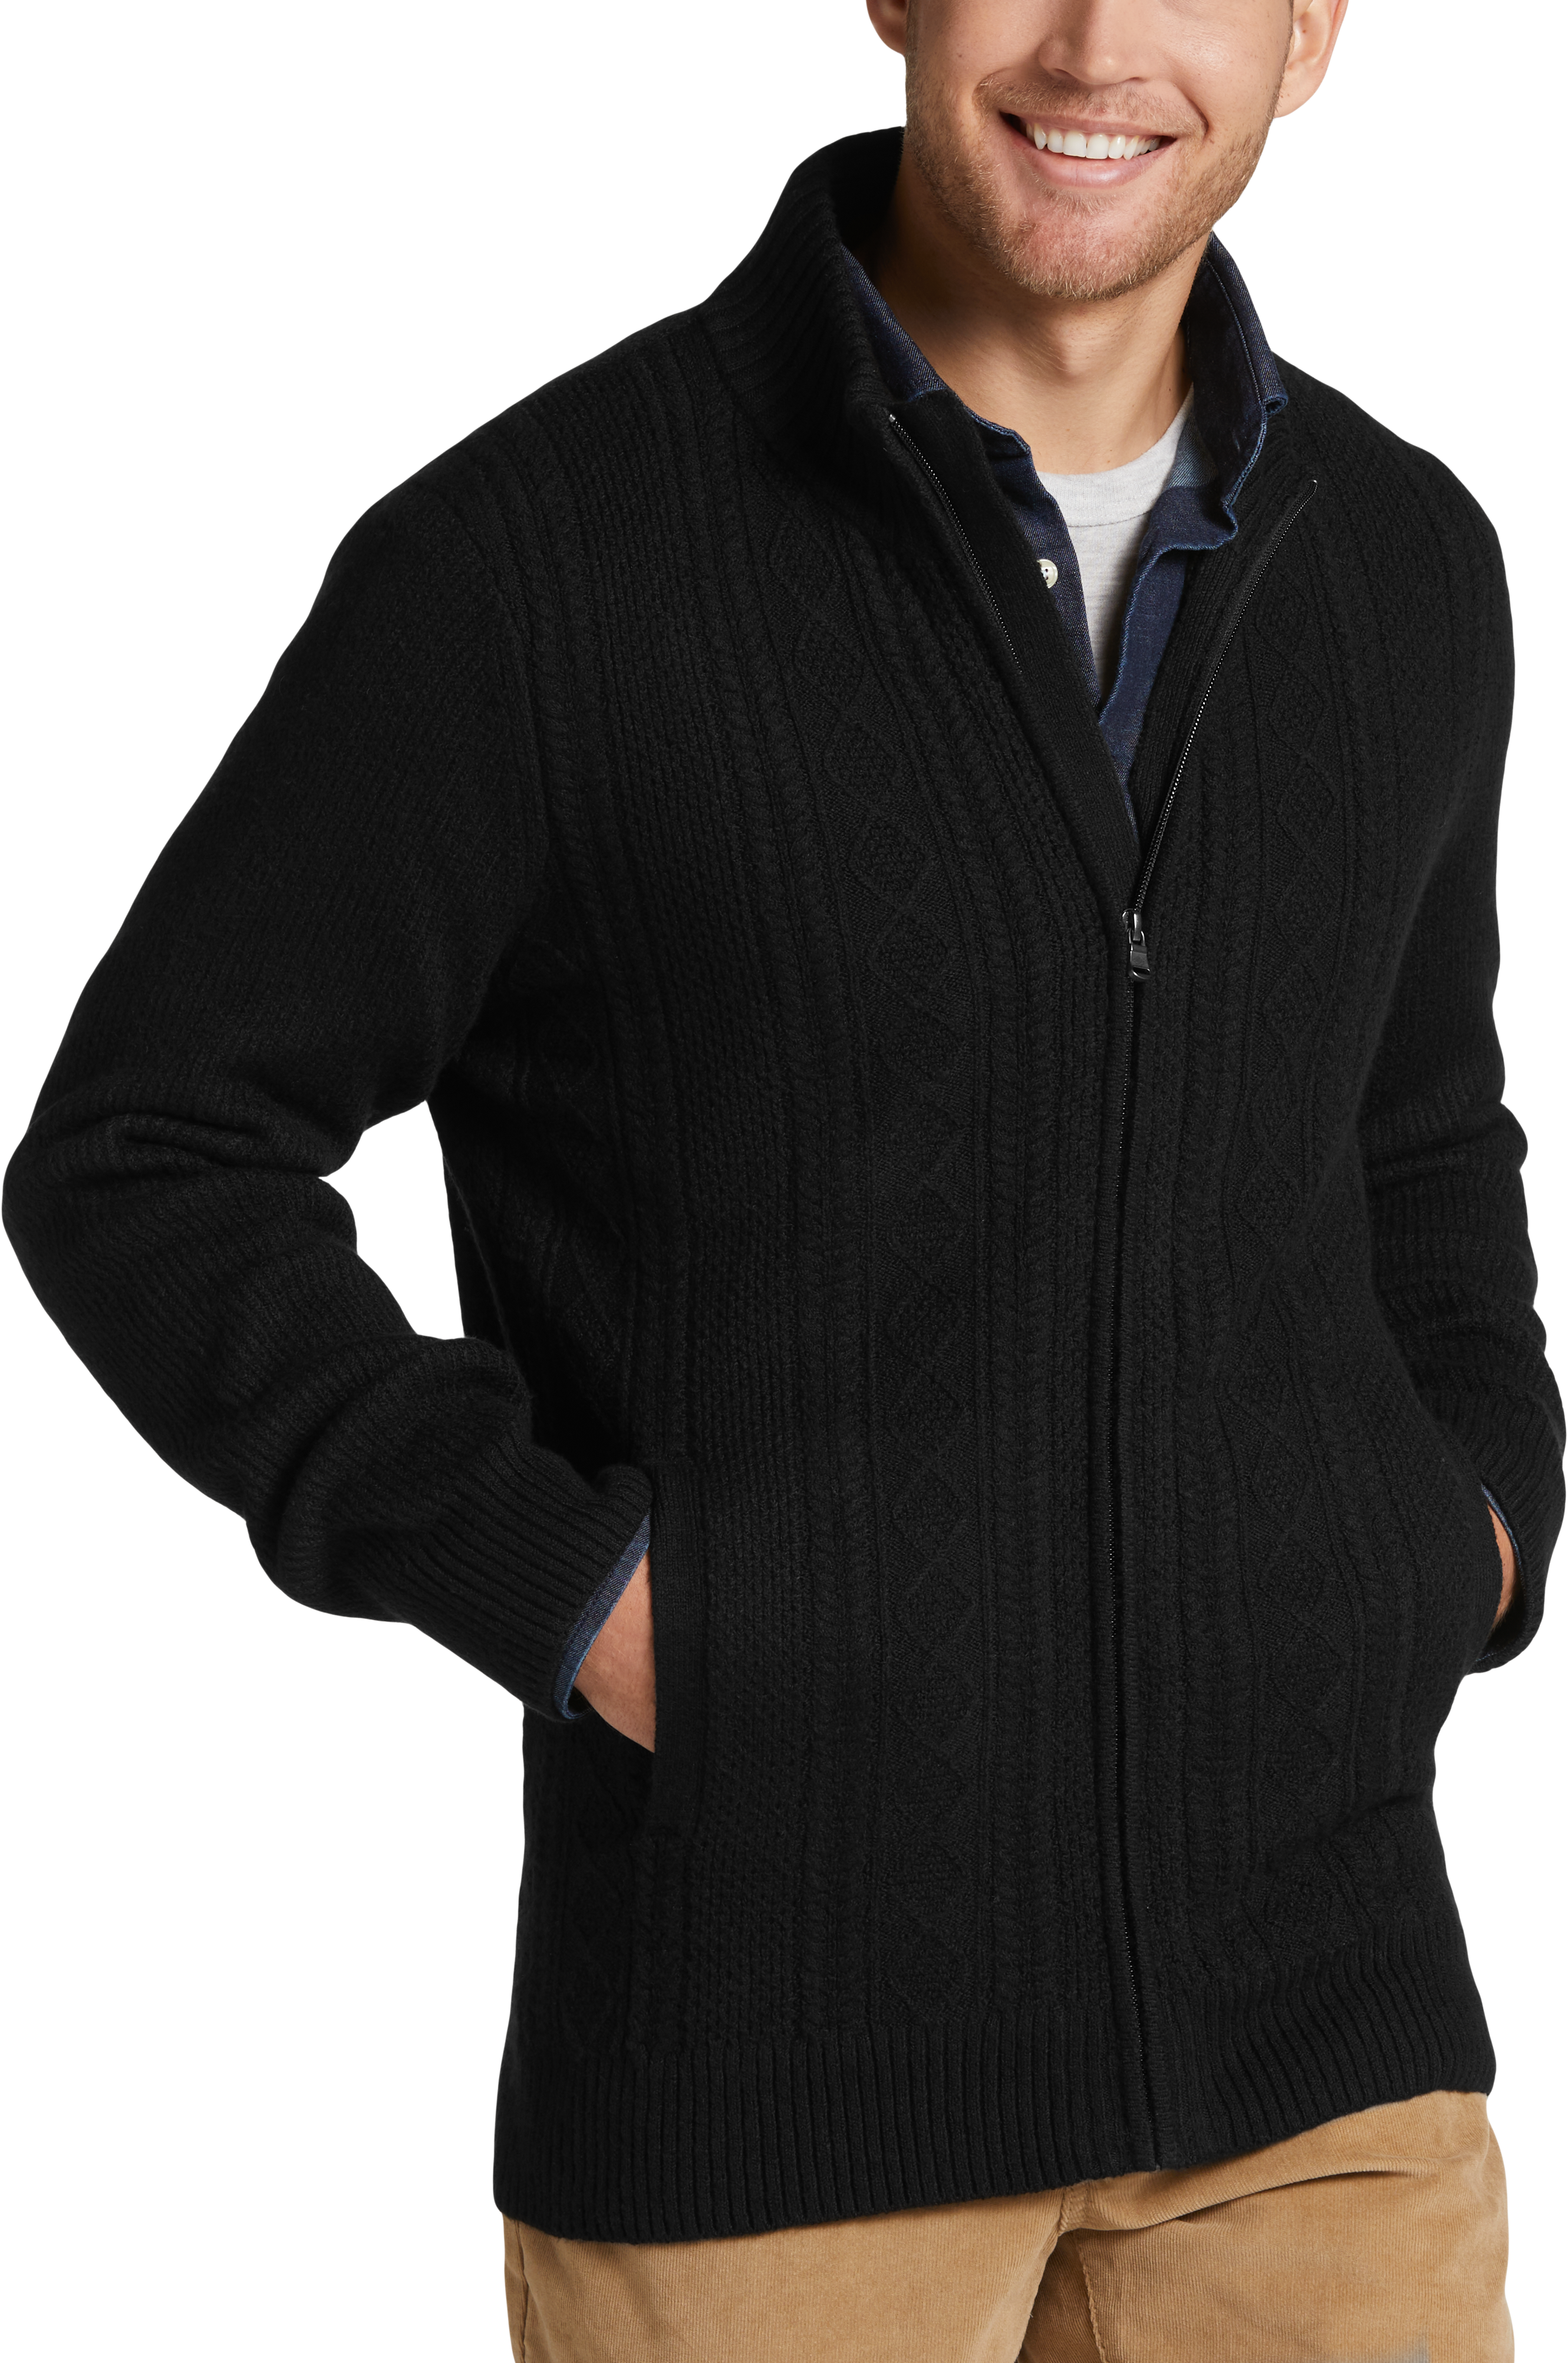 Joseph Abboud Modern Fit Cable Knit Full-Zip Sweater, Black - Men's ...